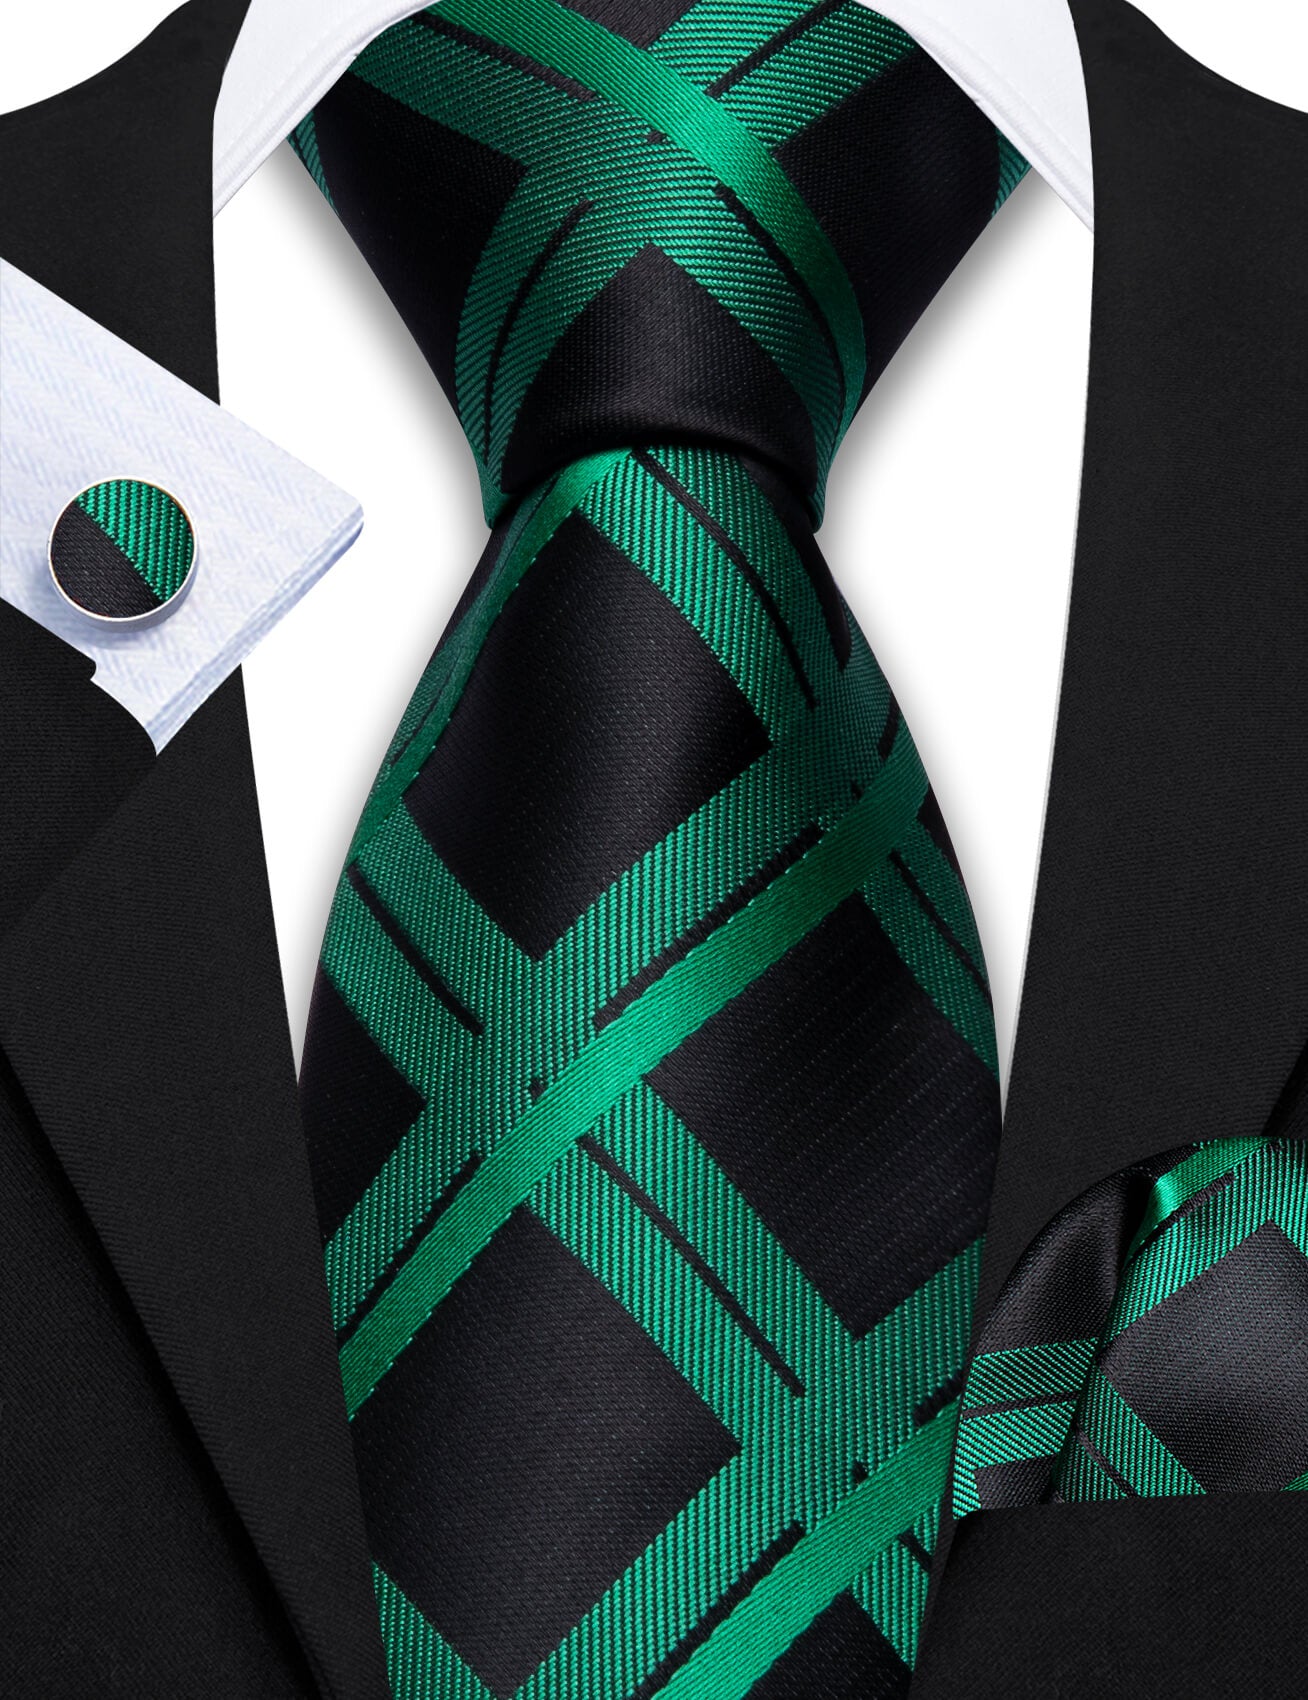 Barry.wang Plaid Tie Silk Black Emerald Green Men's Tie Pocket Square Cufflinks Set